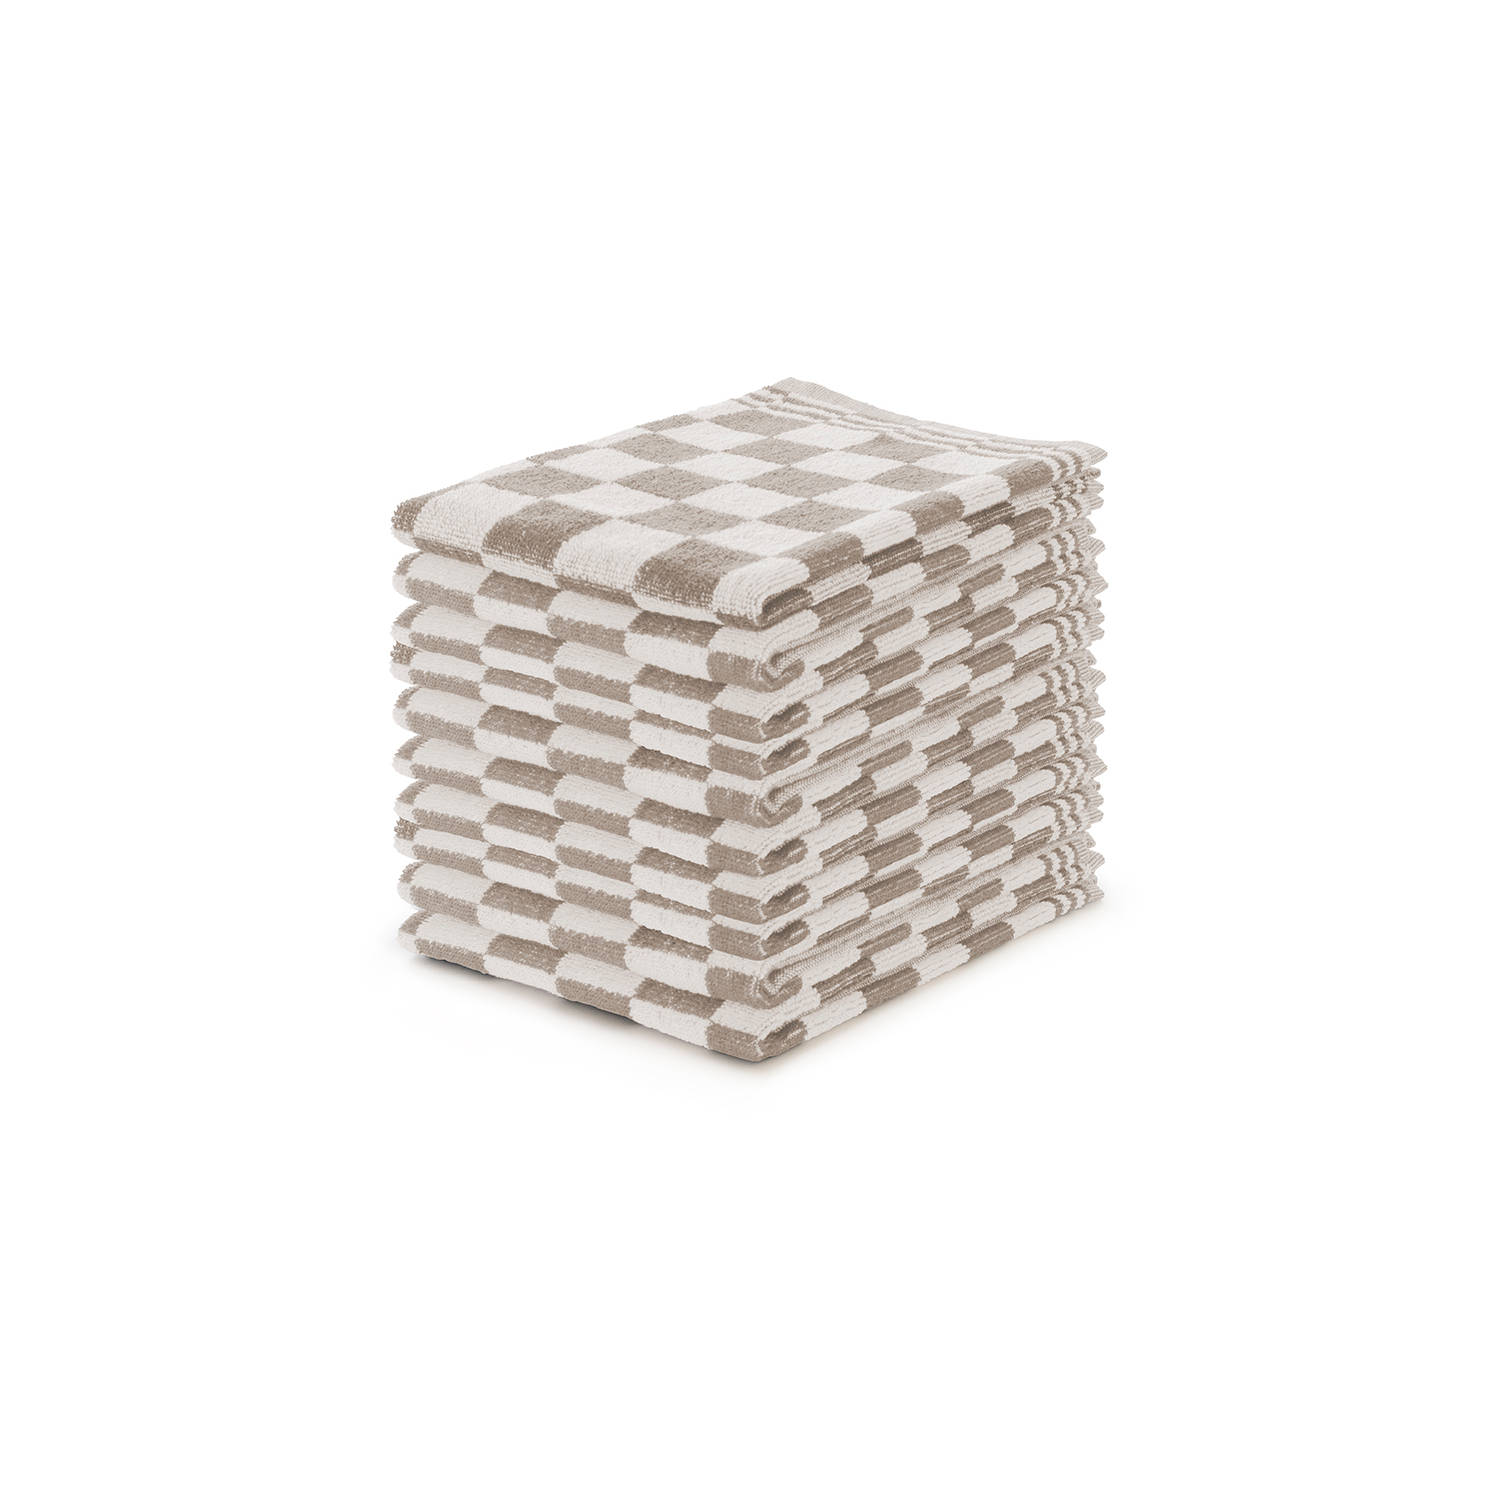 Keukendoekset Blok Zand - 50x50 - Set van 10 - Geblokt - Blokdoeken - 100% katoen - Horeca Keukendoeken